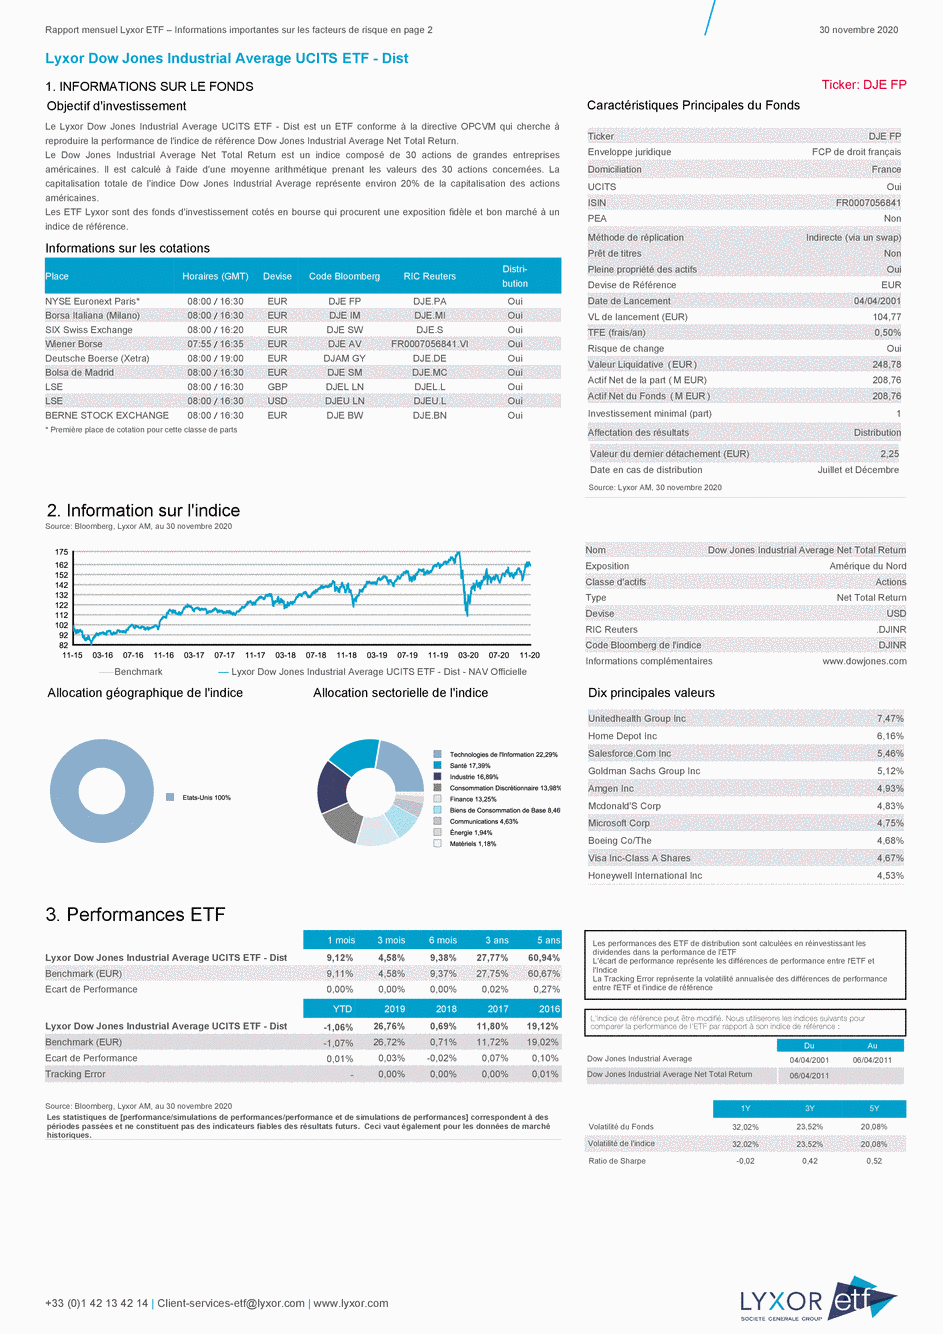 Reporting Lyxor Dow Jones Industrial Average UCITS ETF - Dist - 30/11/2020 - Français